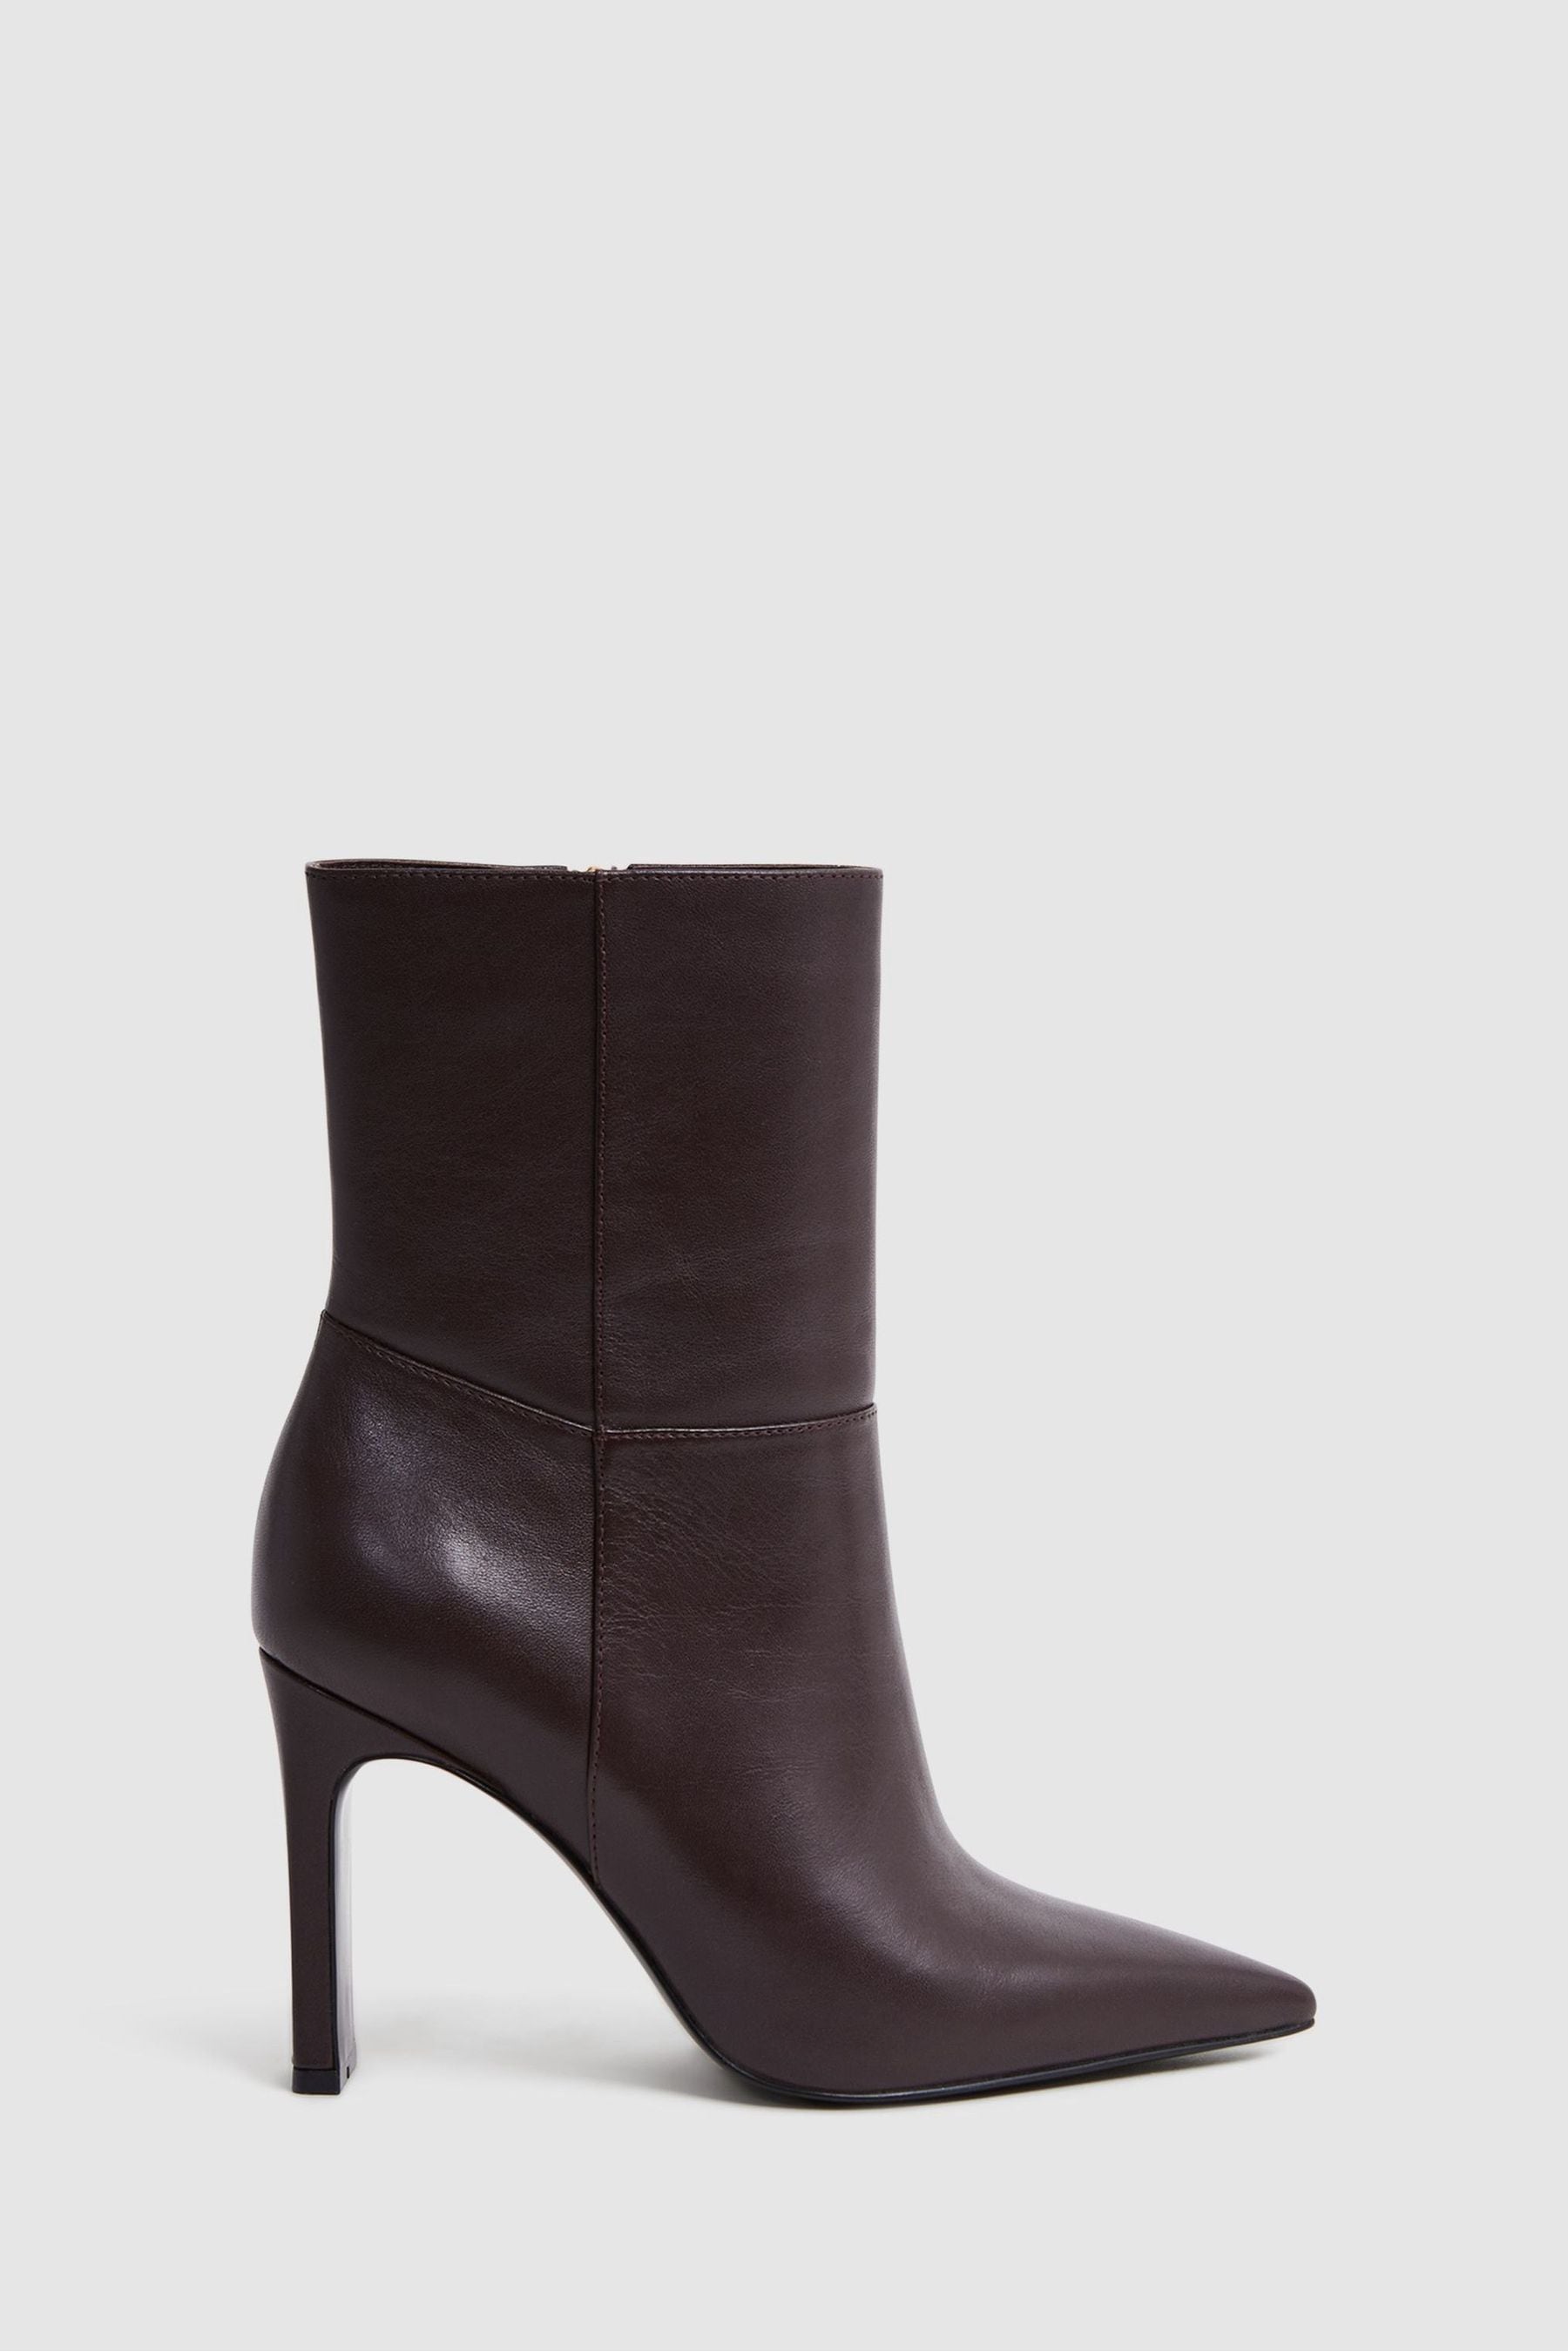 Reiss Vanessa - Burgundy Leather Heeled Ankle Boots, Uk 8 Eu 41